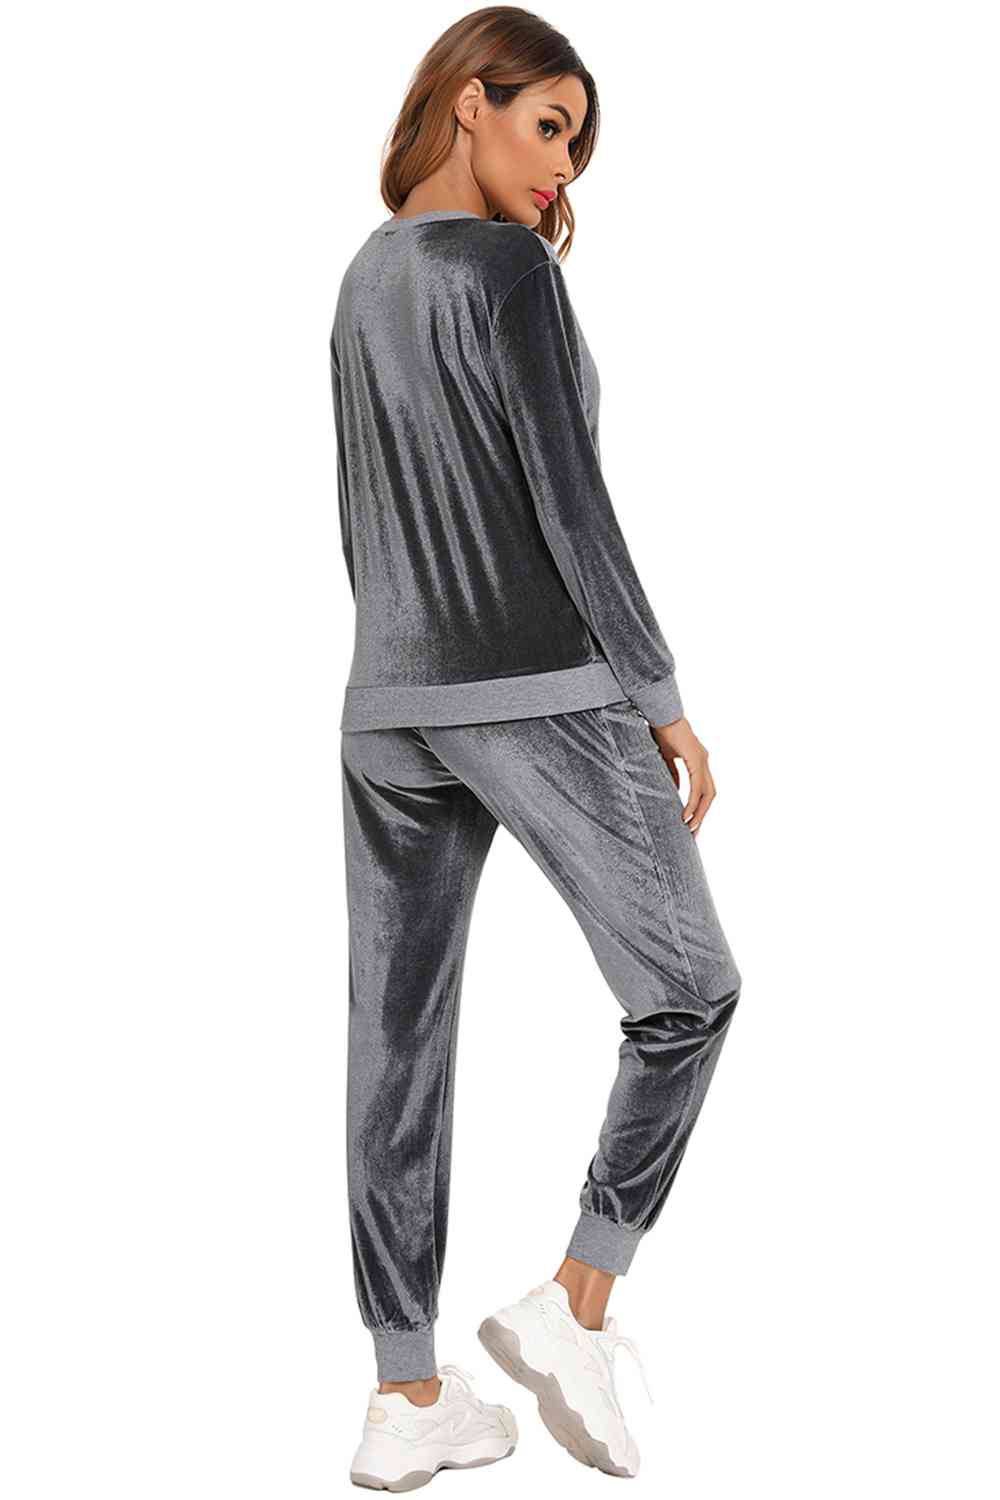 Round Neck Long Sleeve Loungewear Set with Pockets